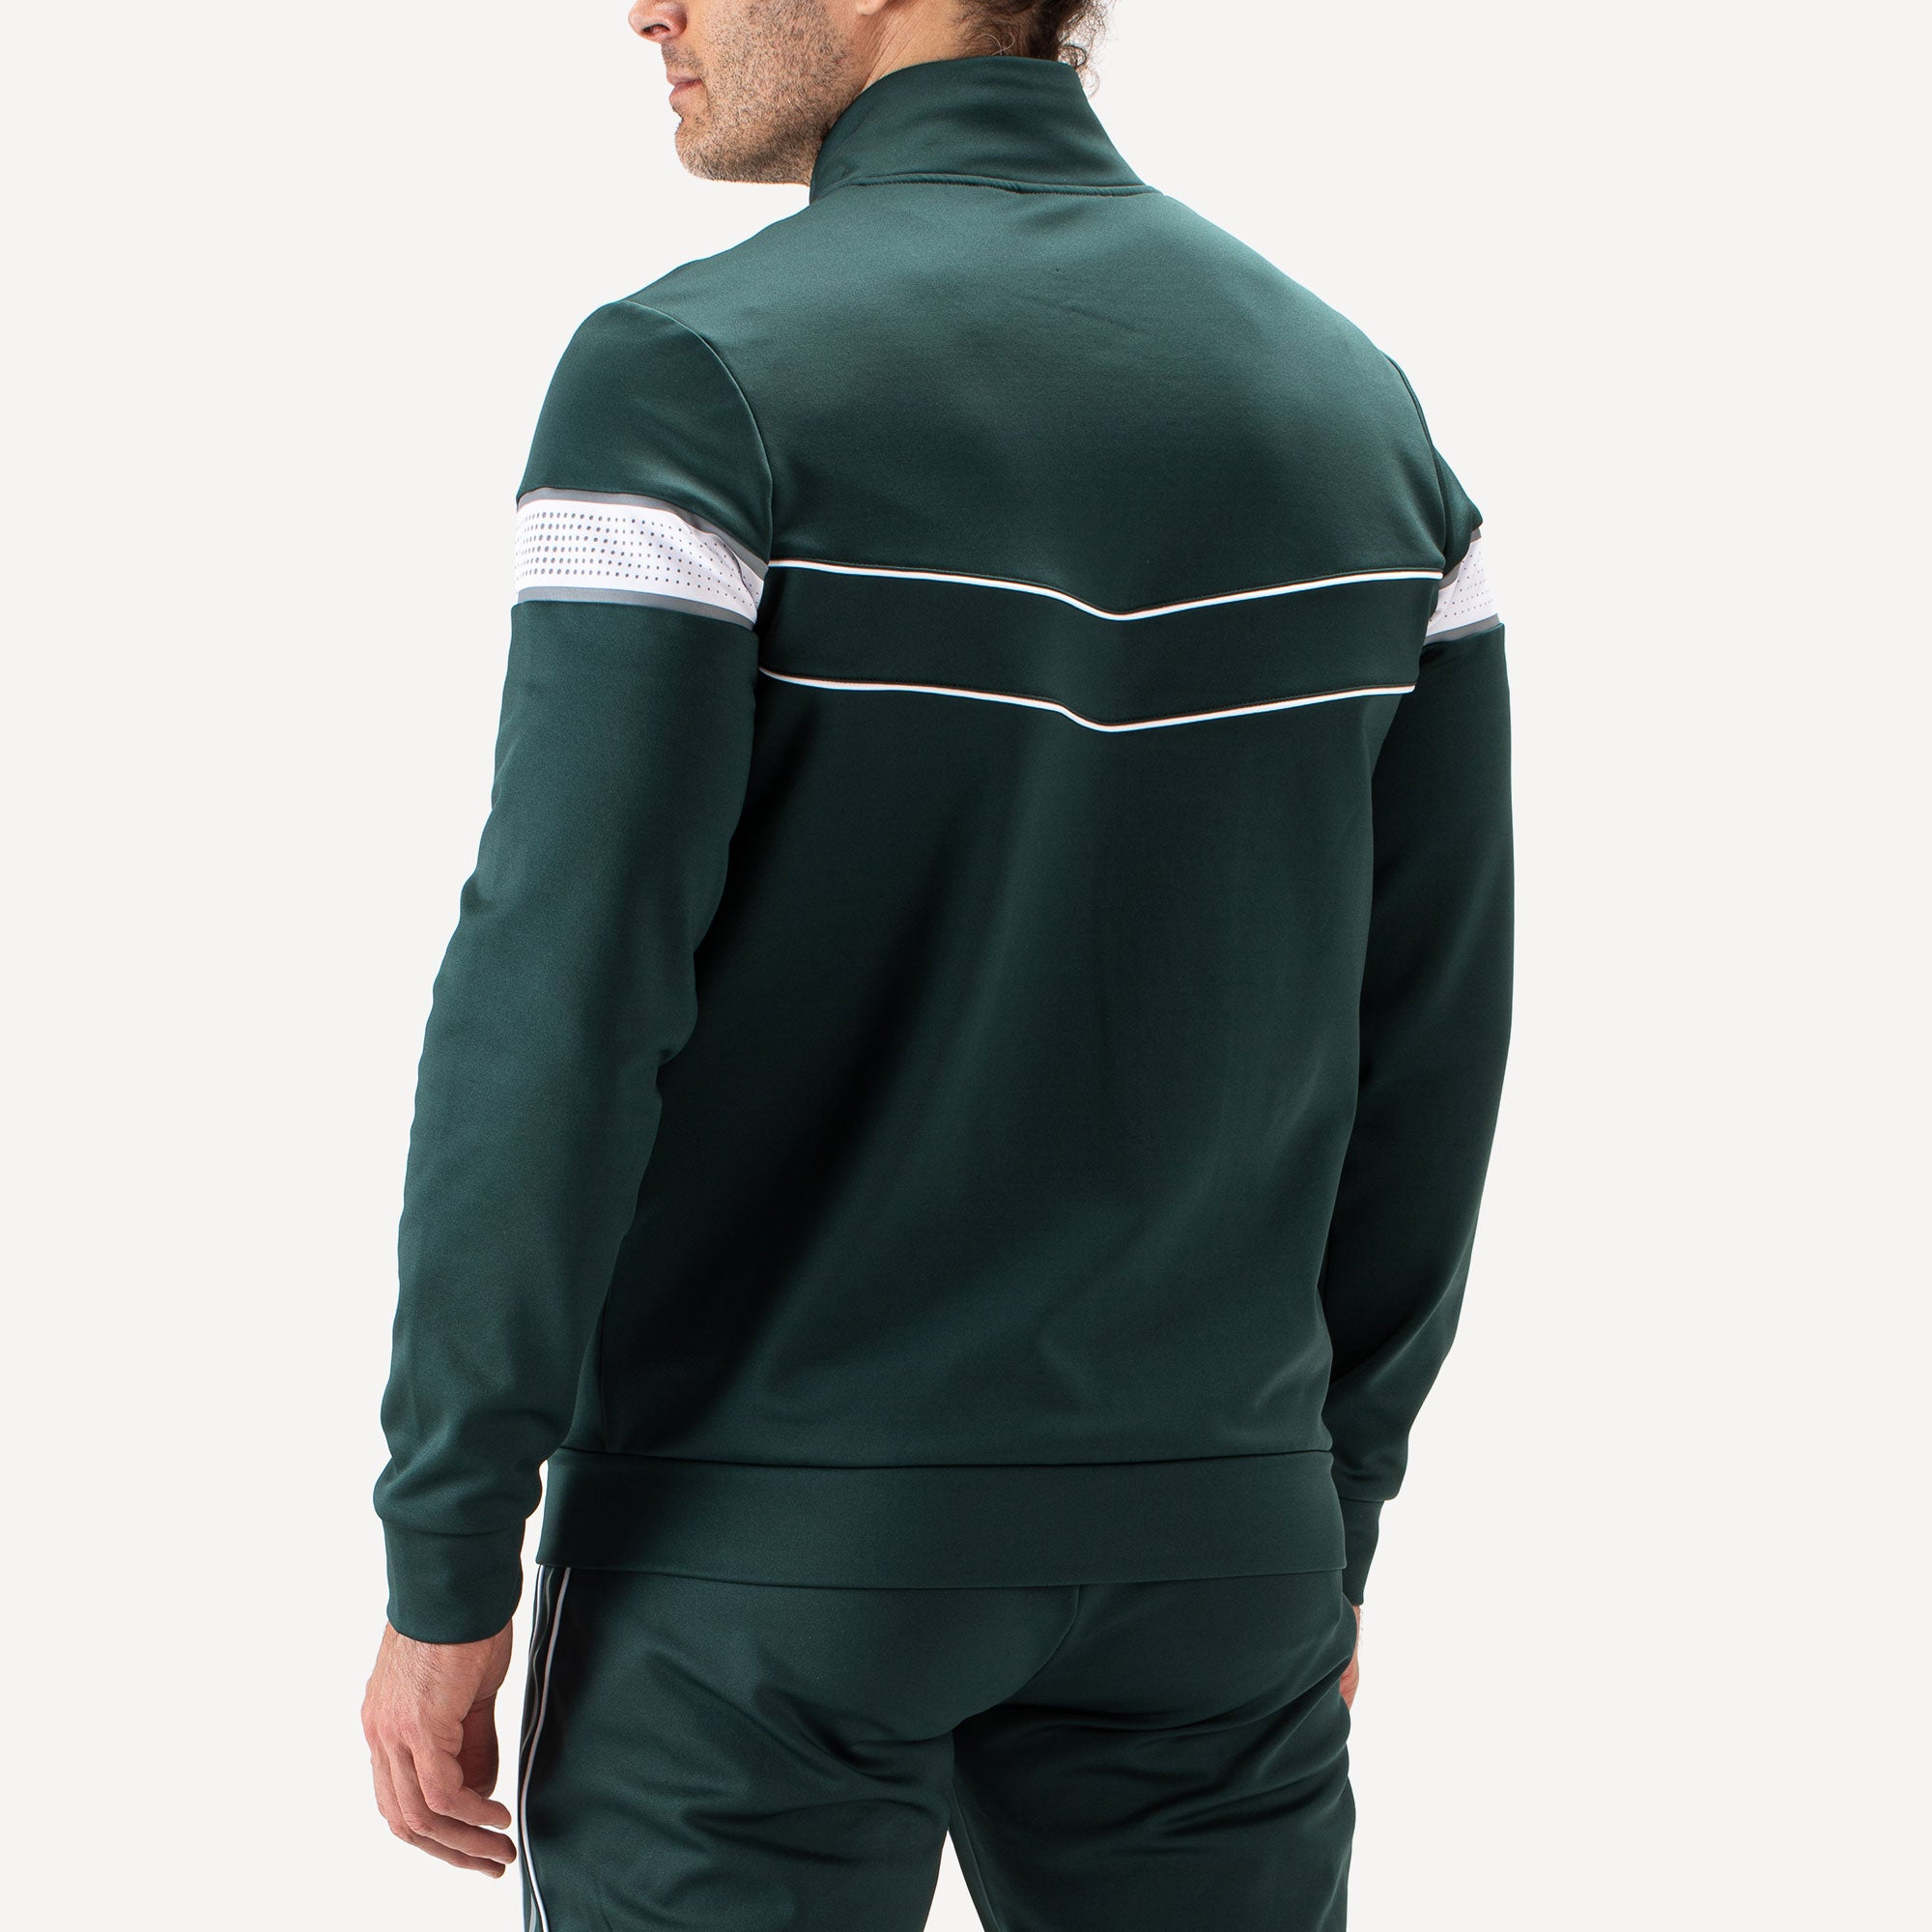 Sjeng Sports Alvar Men's Tennis Jacket - Green (2)